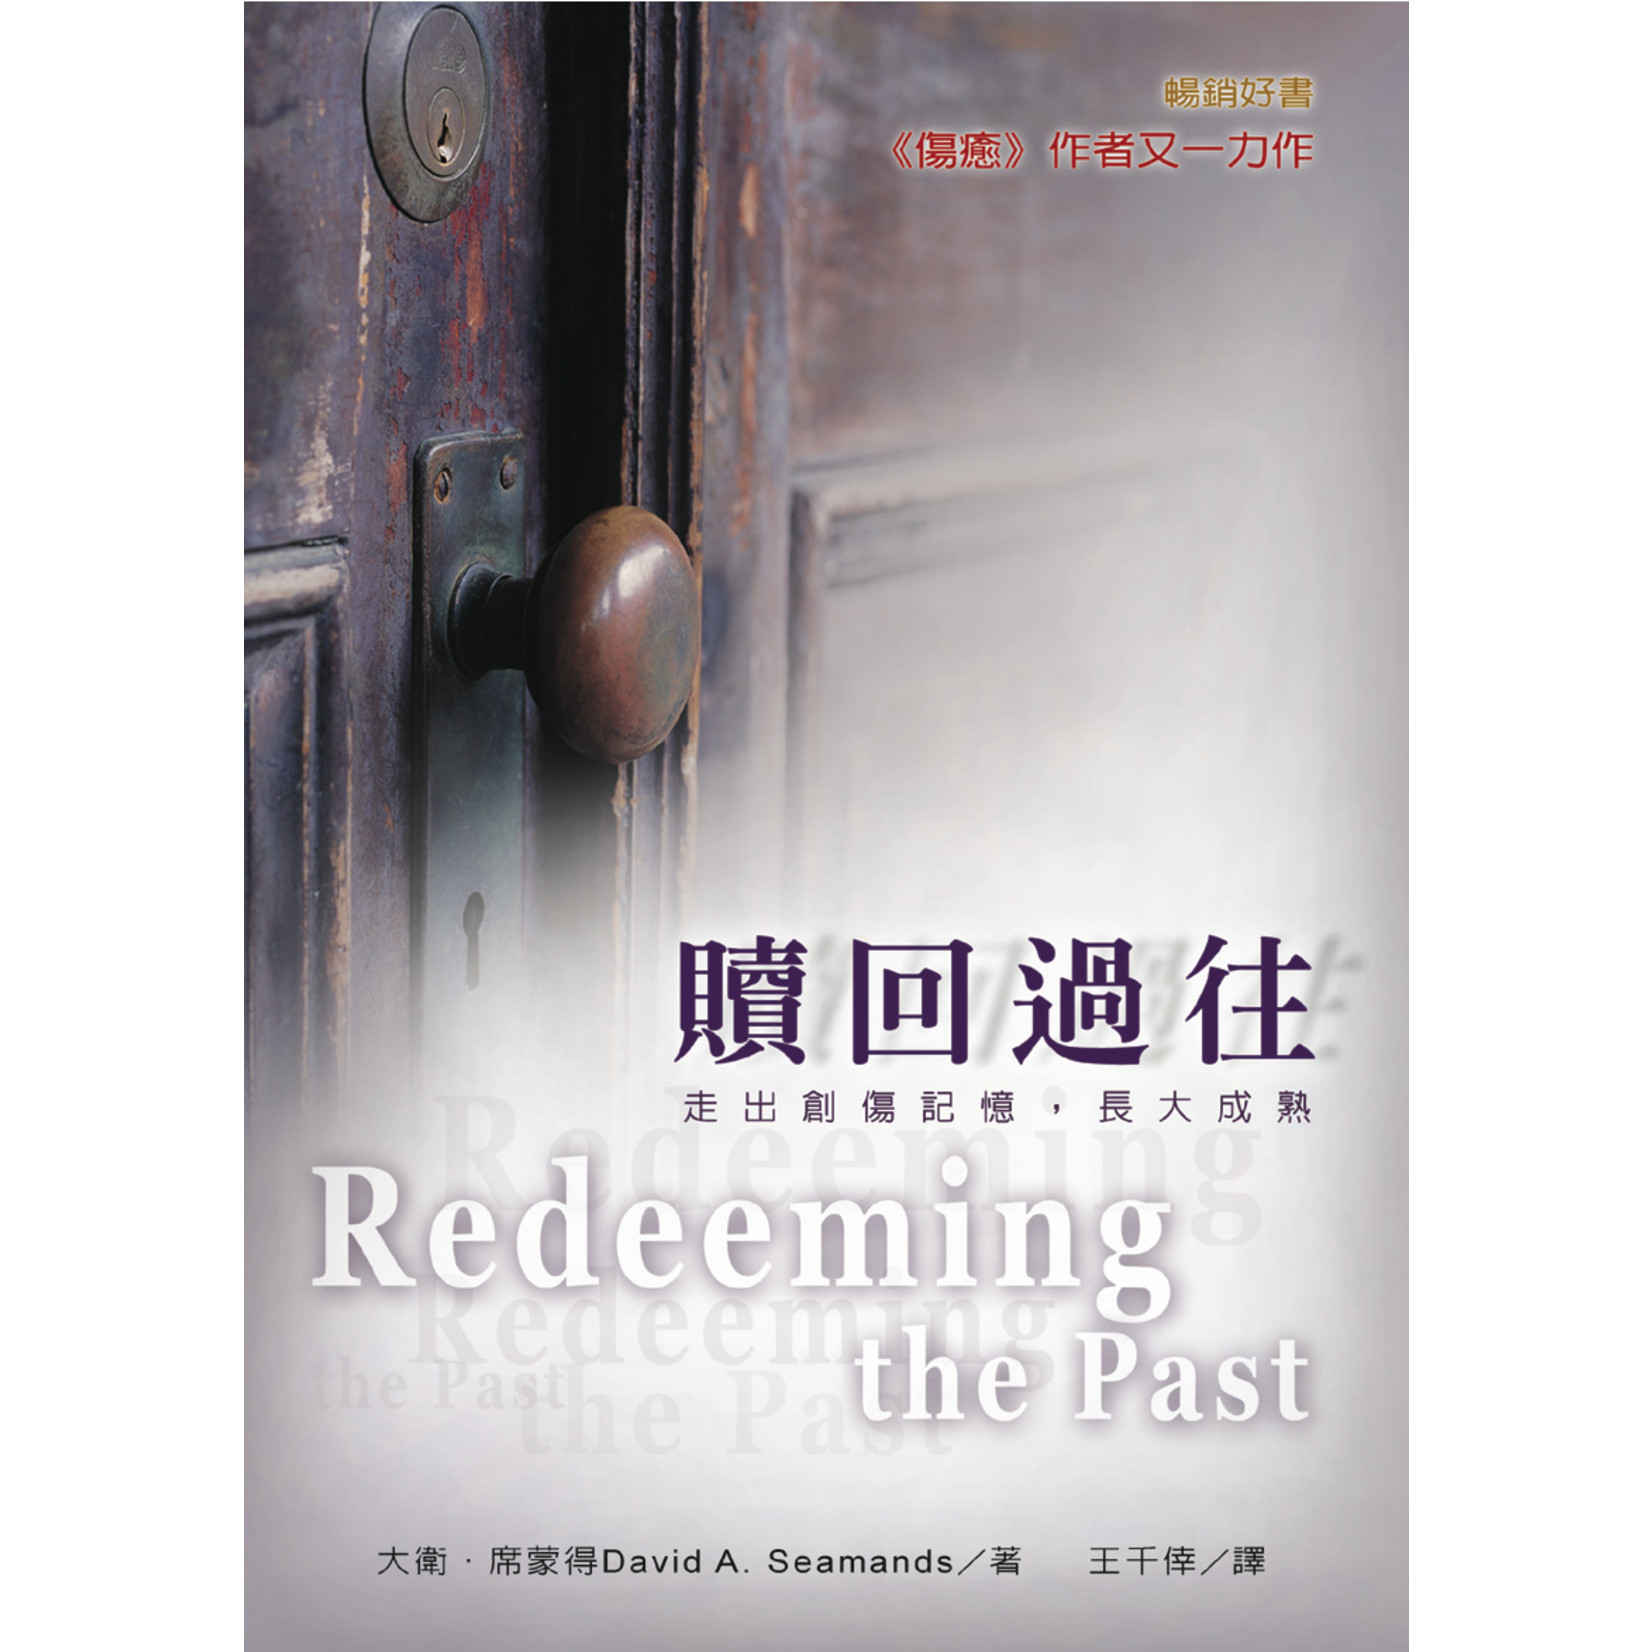 中國學園傳道會 Taiwan Campus Crusade for Christ 贖回過往：走出創傷記憶，長大成熟（斷版） Redeeming the Past